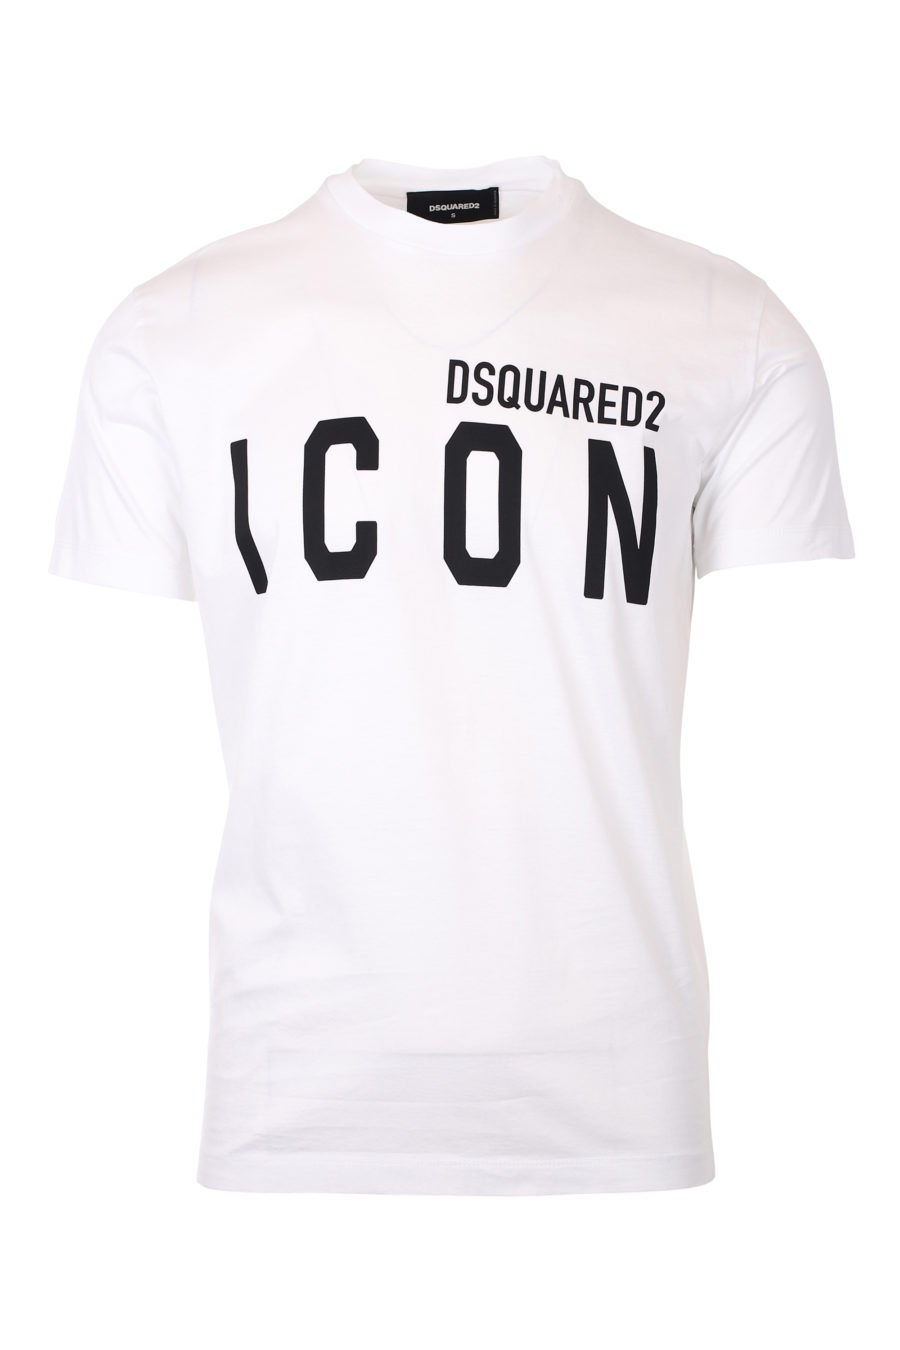 T-shirt branca com o logótipo "icon" - IMG 9756